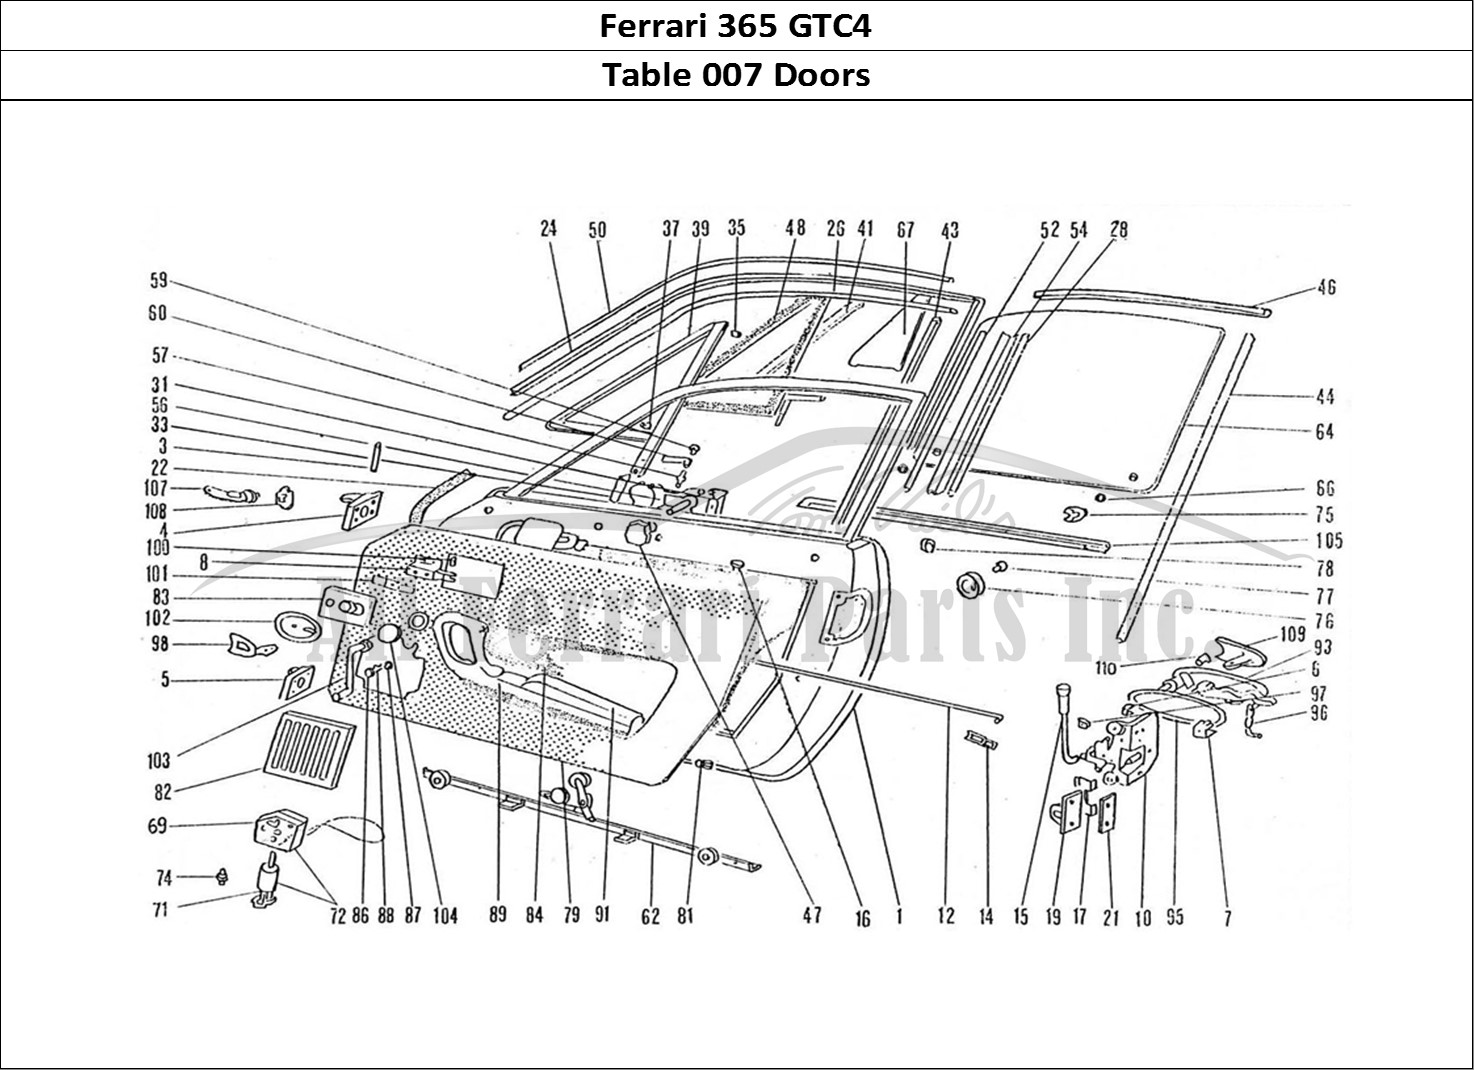 Ferrari Parts Ferrari 365 GTC4 (Coachwork) Page 007 Doors & Fixings